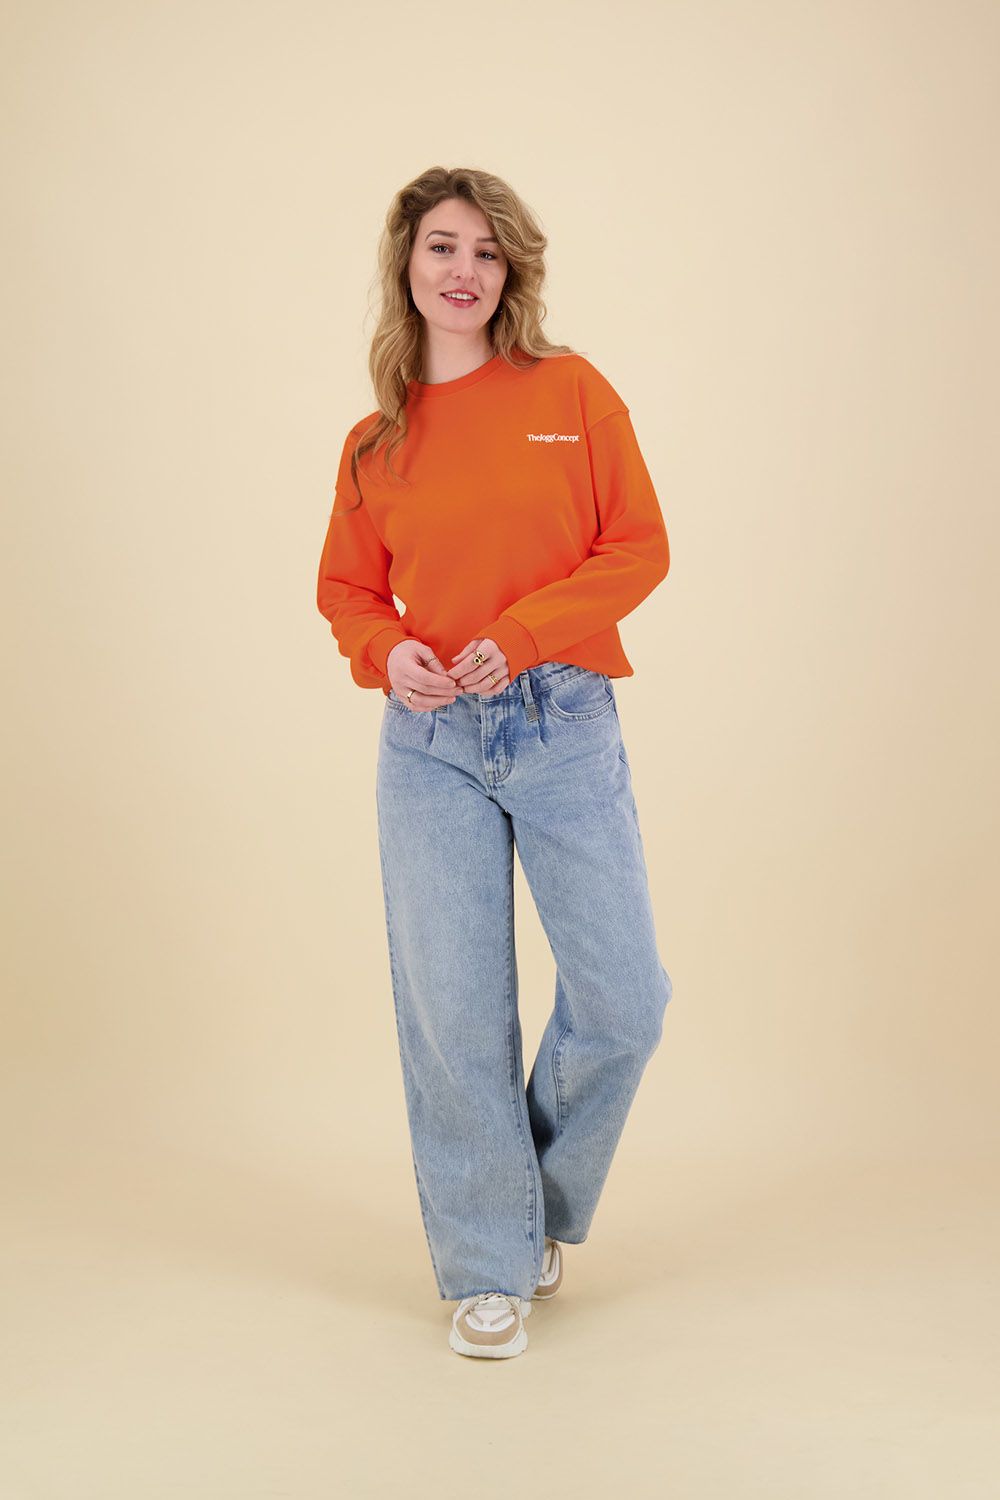 The Jogg Concept Sweater Saki Oranje